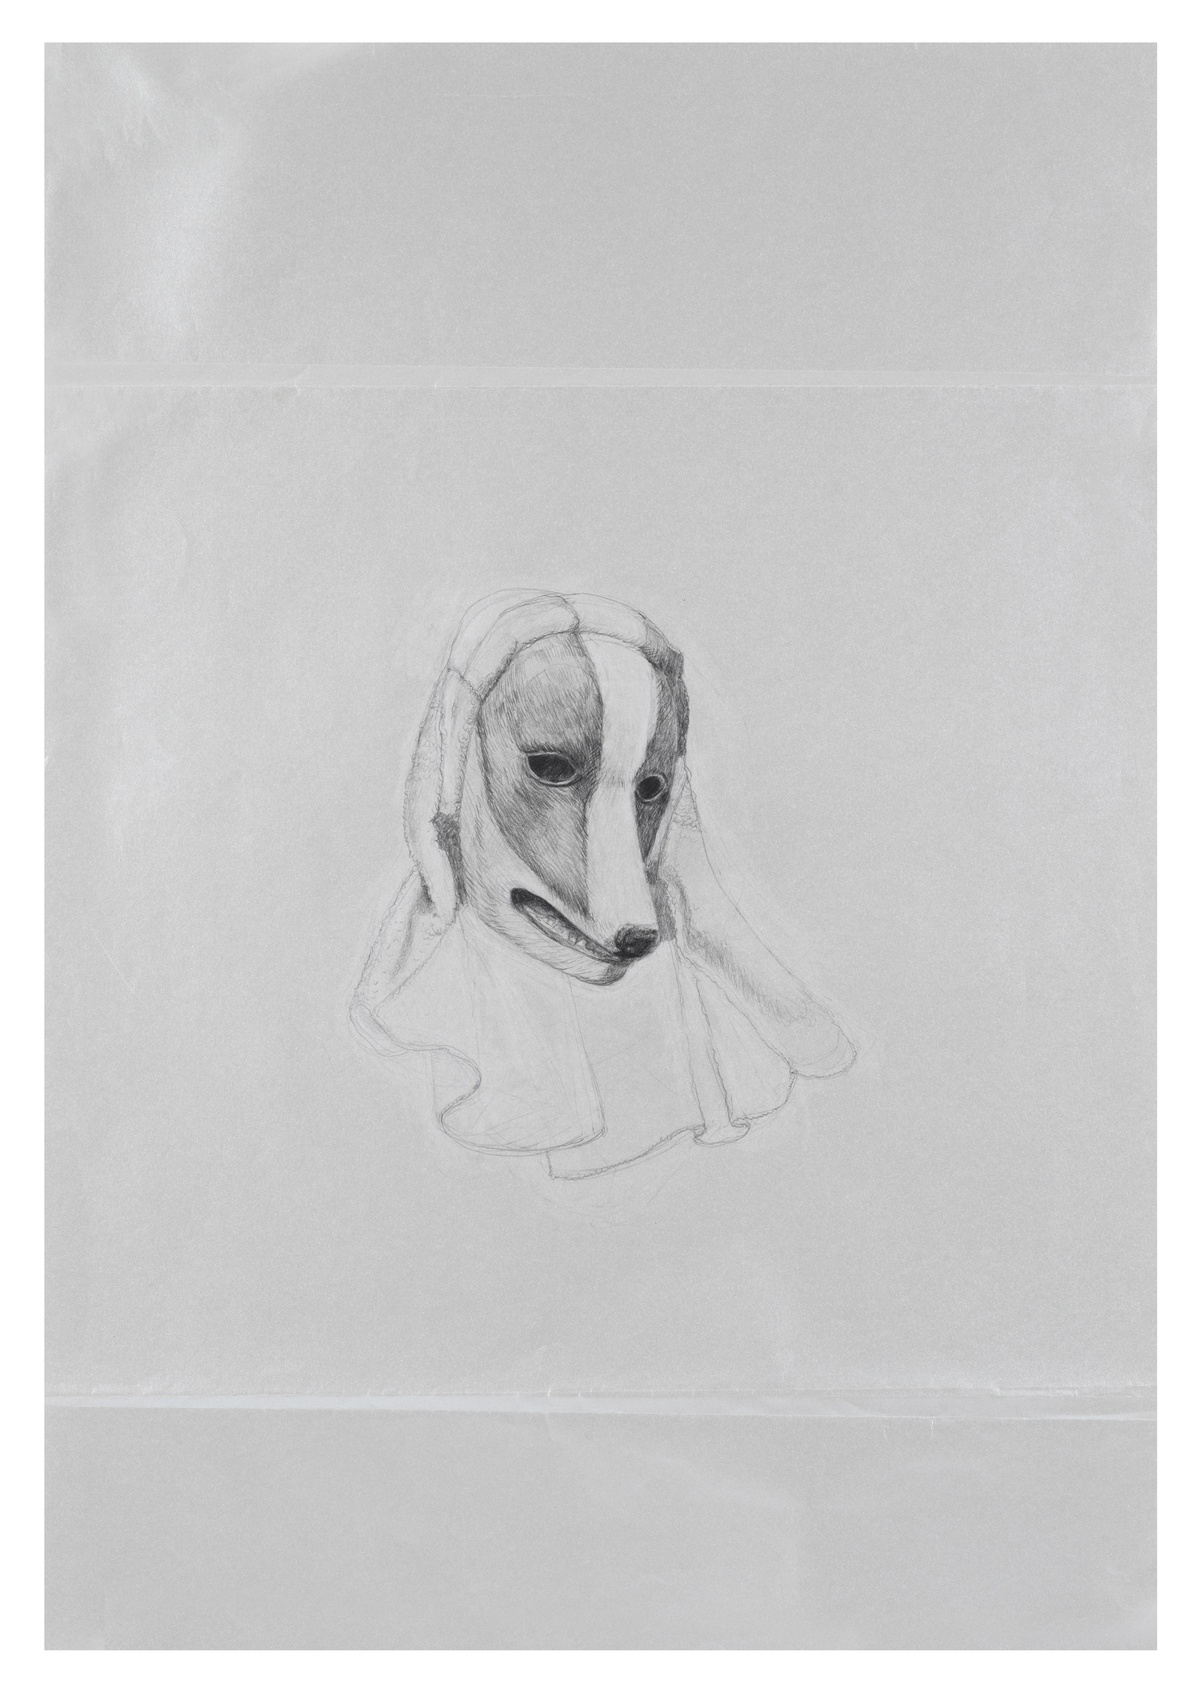 Dachsmaske, 2017. pencil on paper. 102.1 x 72.1 cm